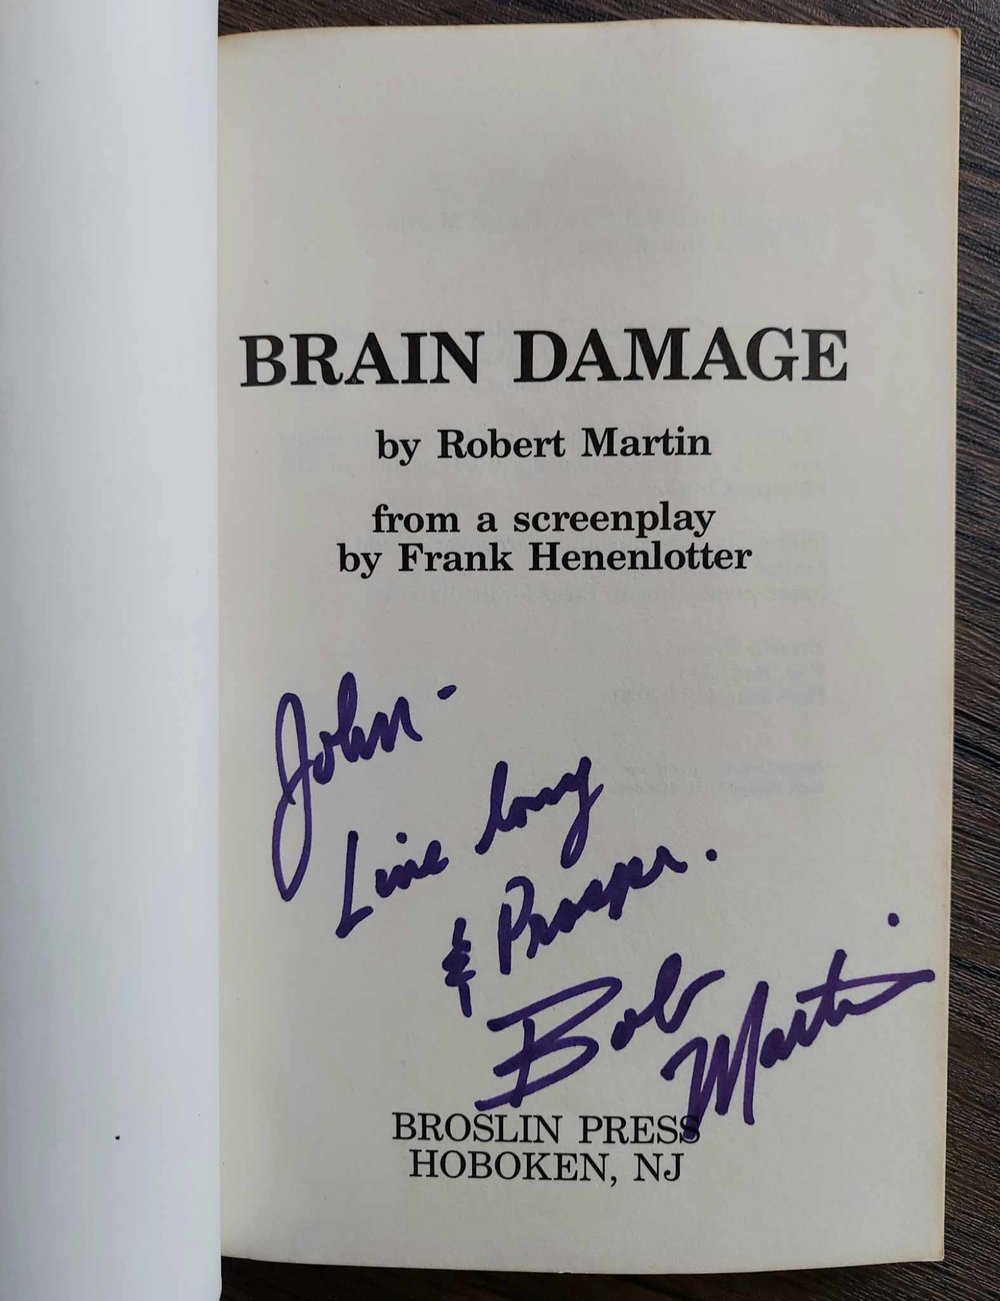 Brain Damage: A Trip Through Hell, by Robert Martin - SIGNED